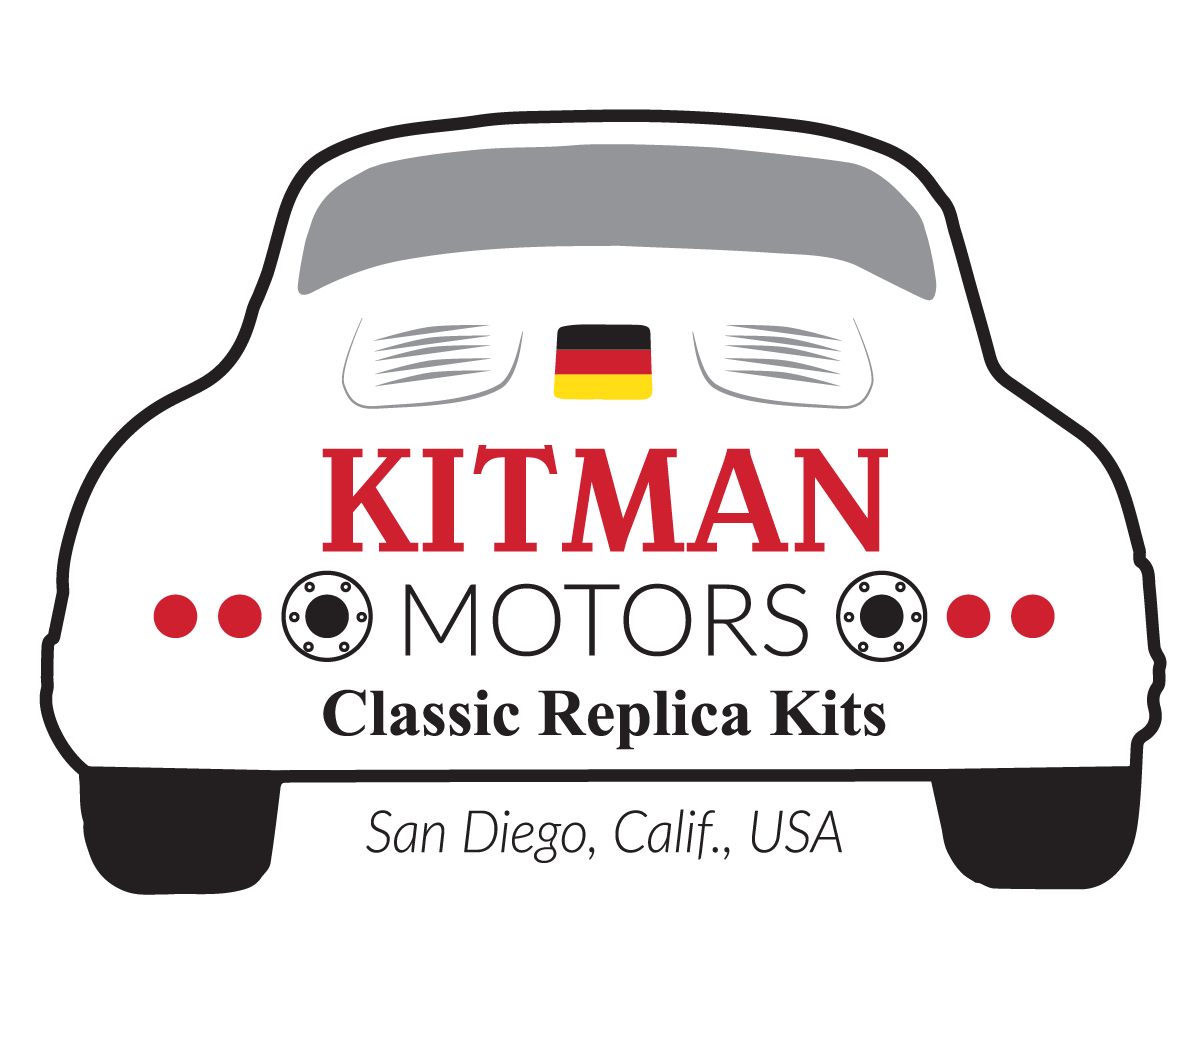 KitMan Motors